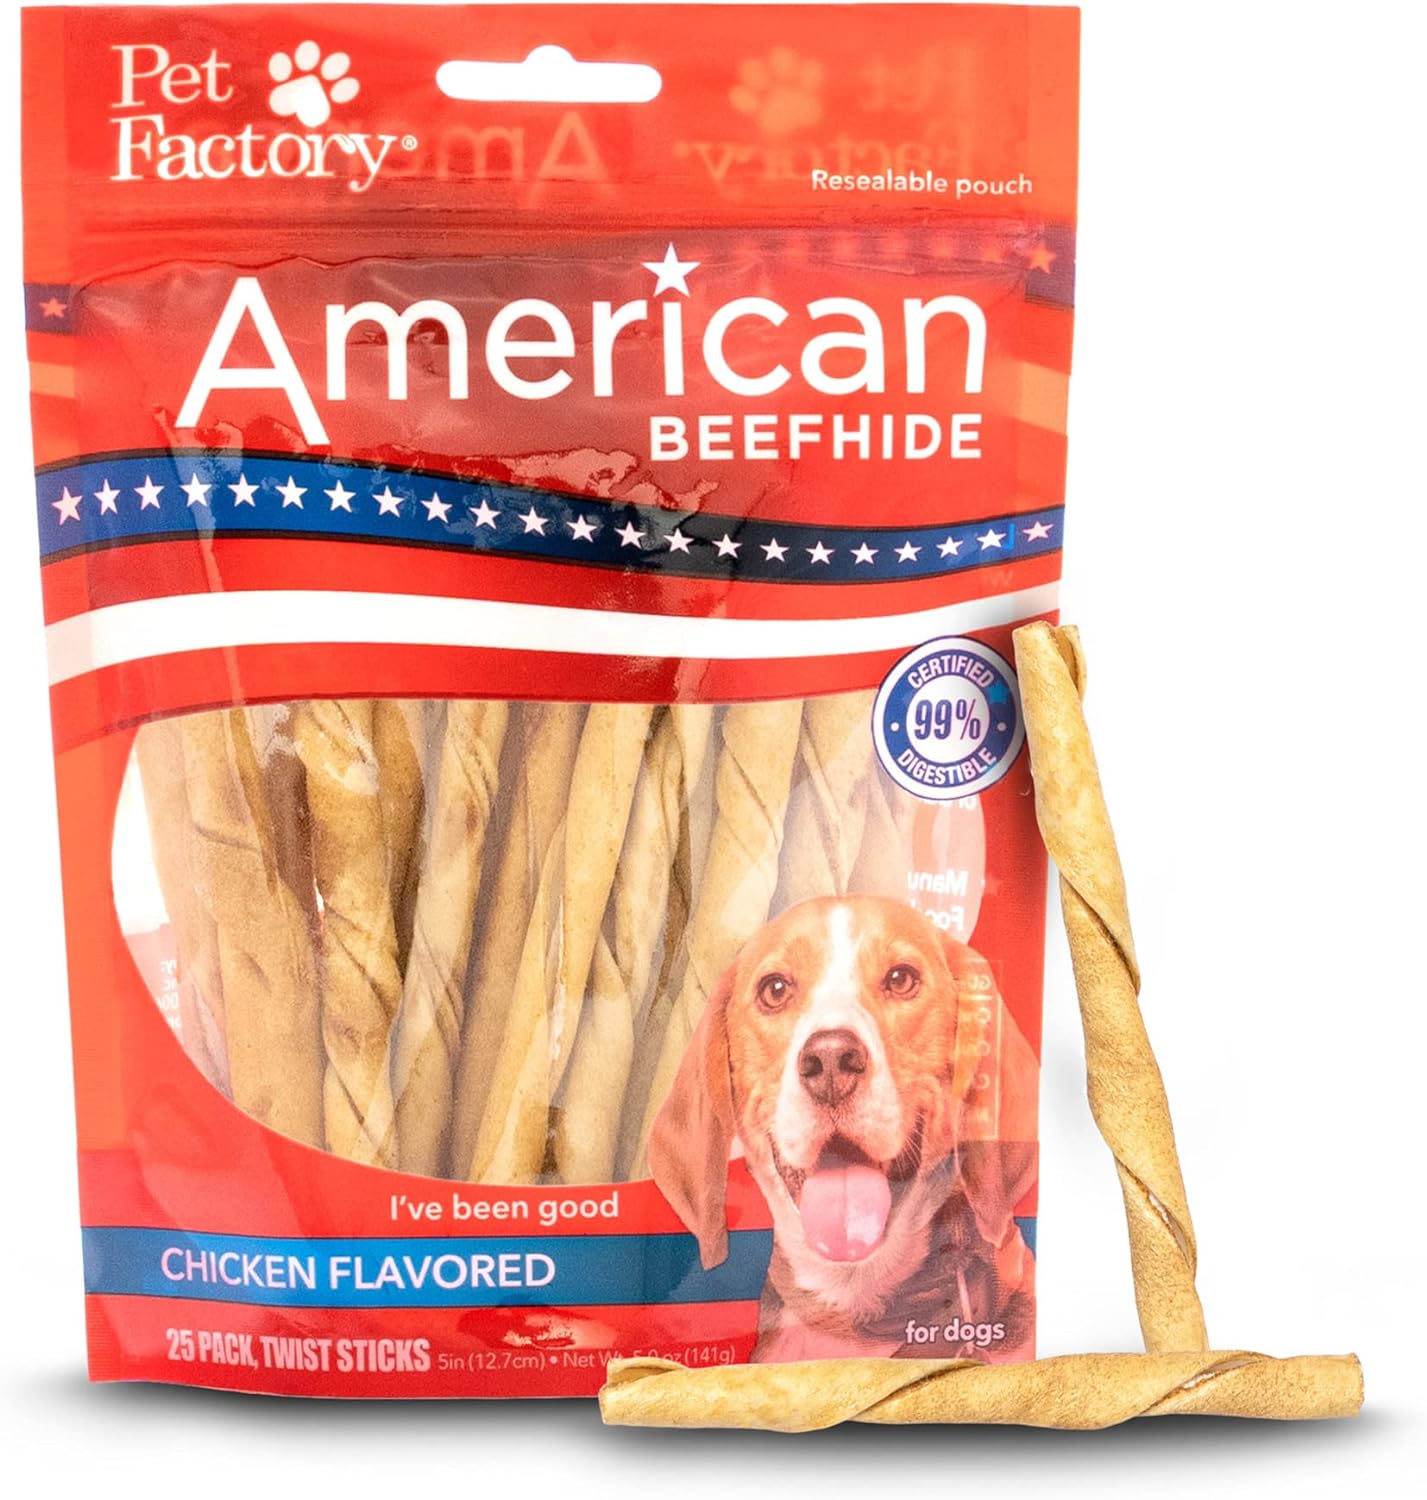 Pet Factory American Beefhide 5" Twist Sticks Dog Chew Treats - Chicken Flavor, 25 Count/1 Pack